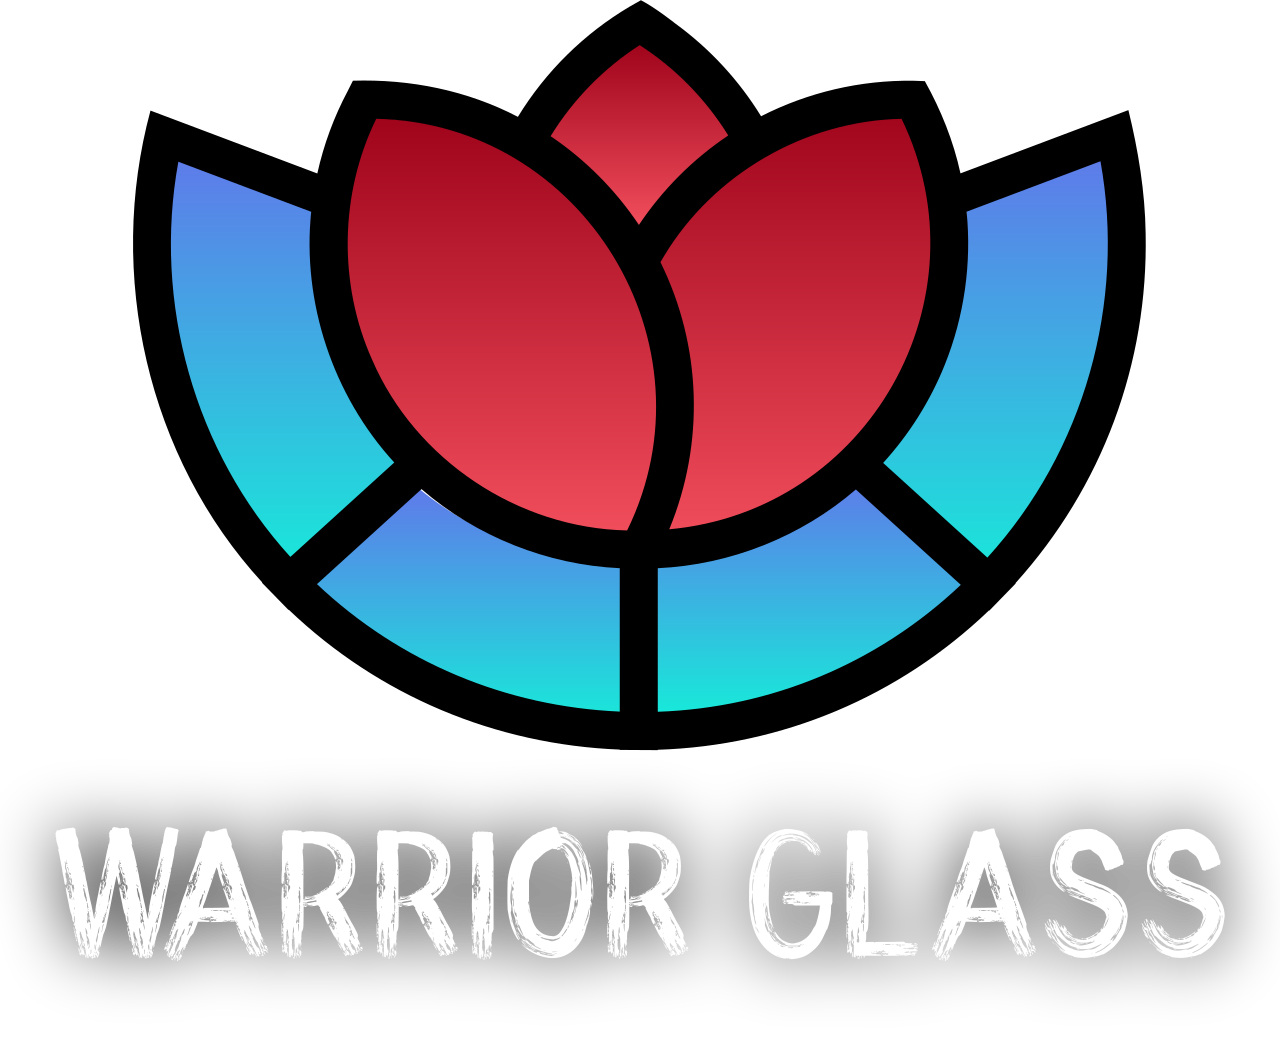 Warrior Glass's logo